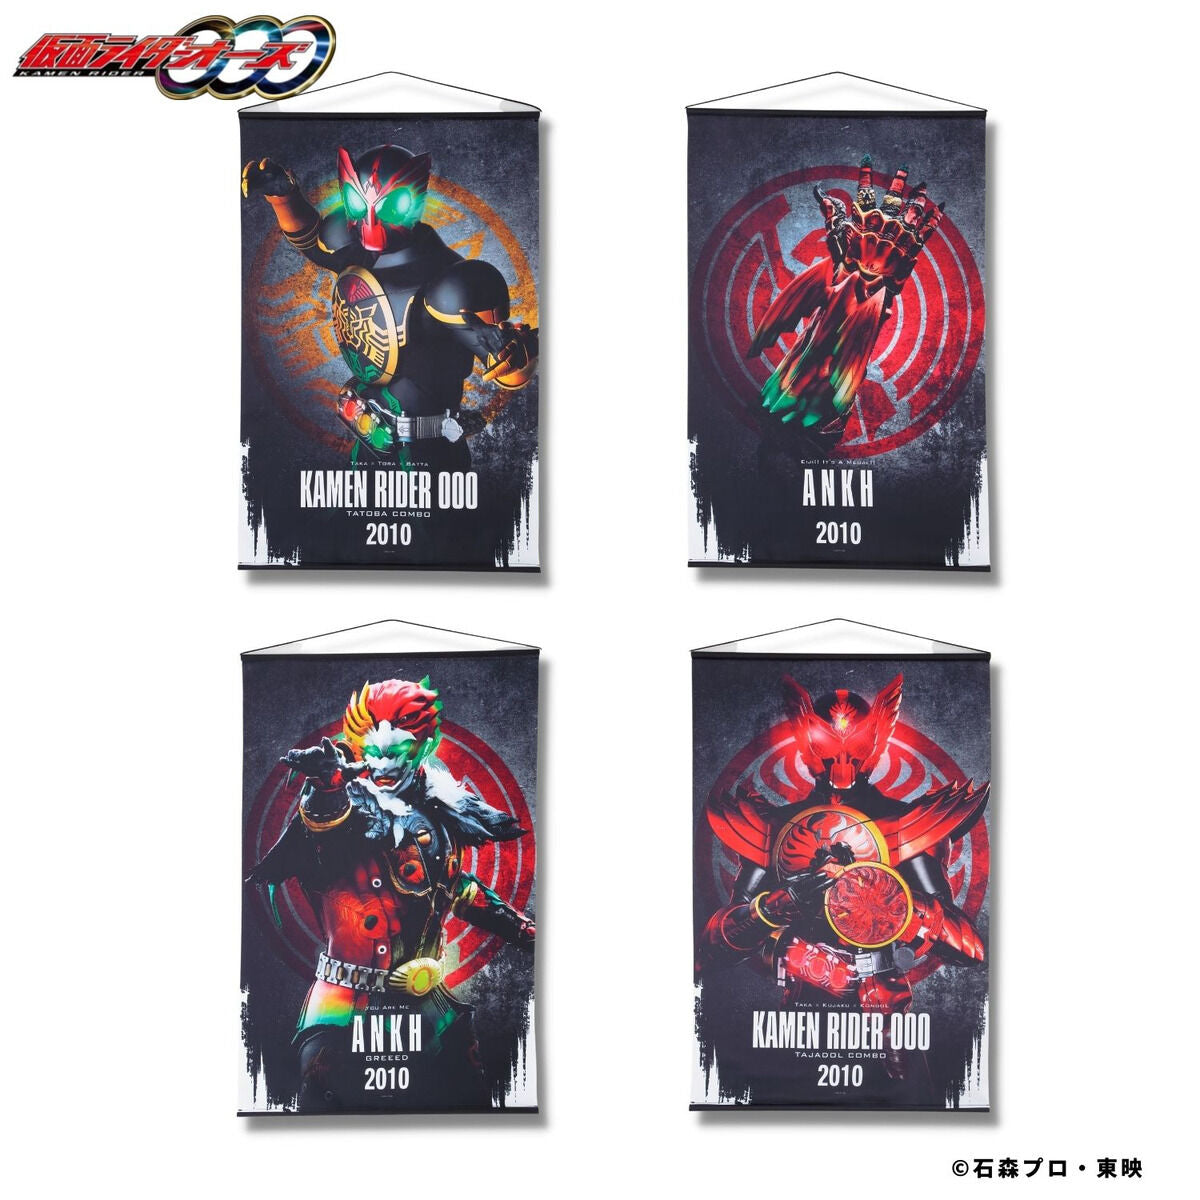 Kamen Rider OOO Tapestry